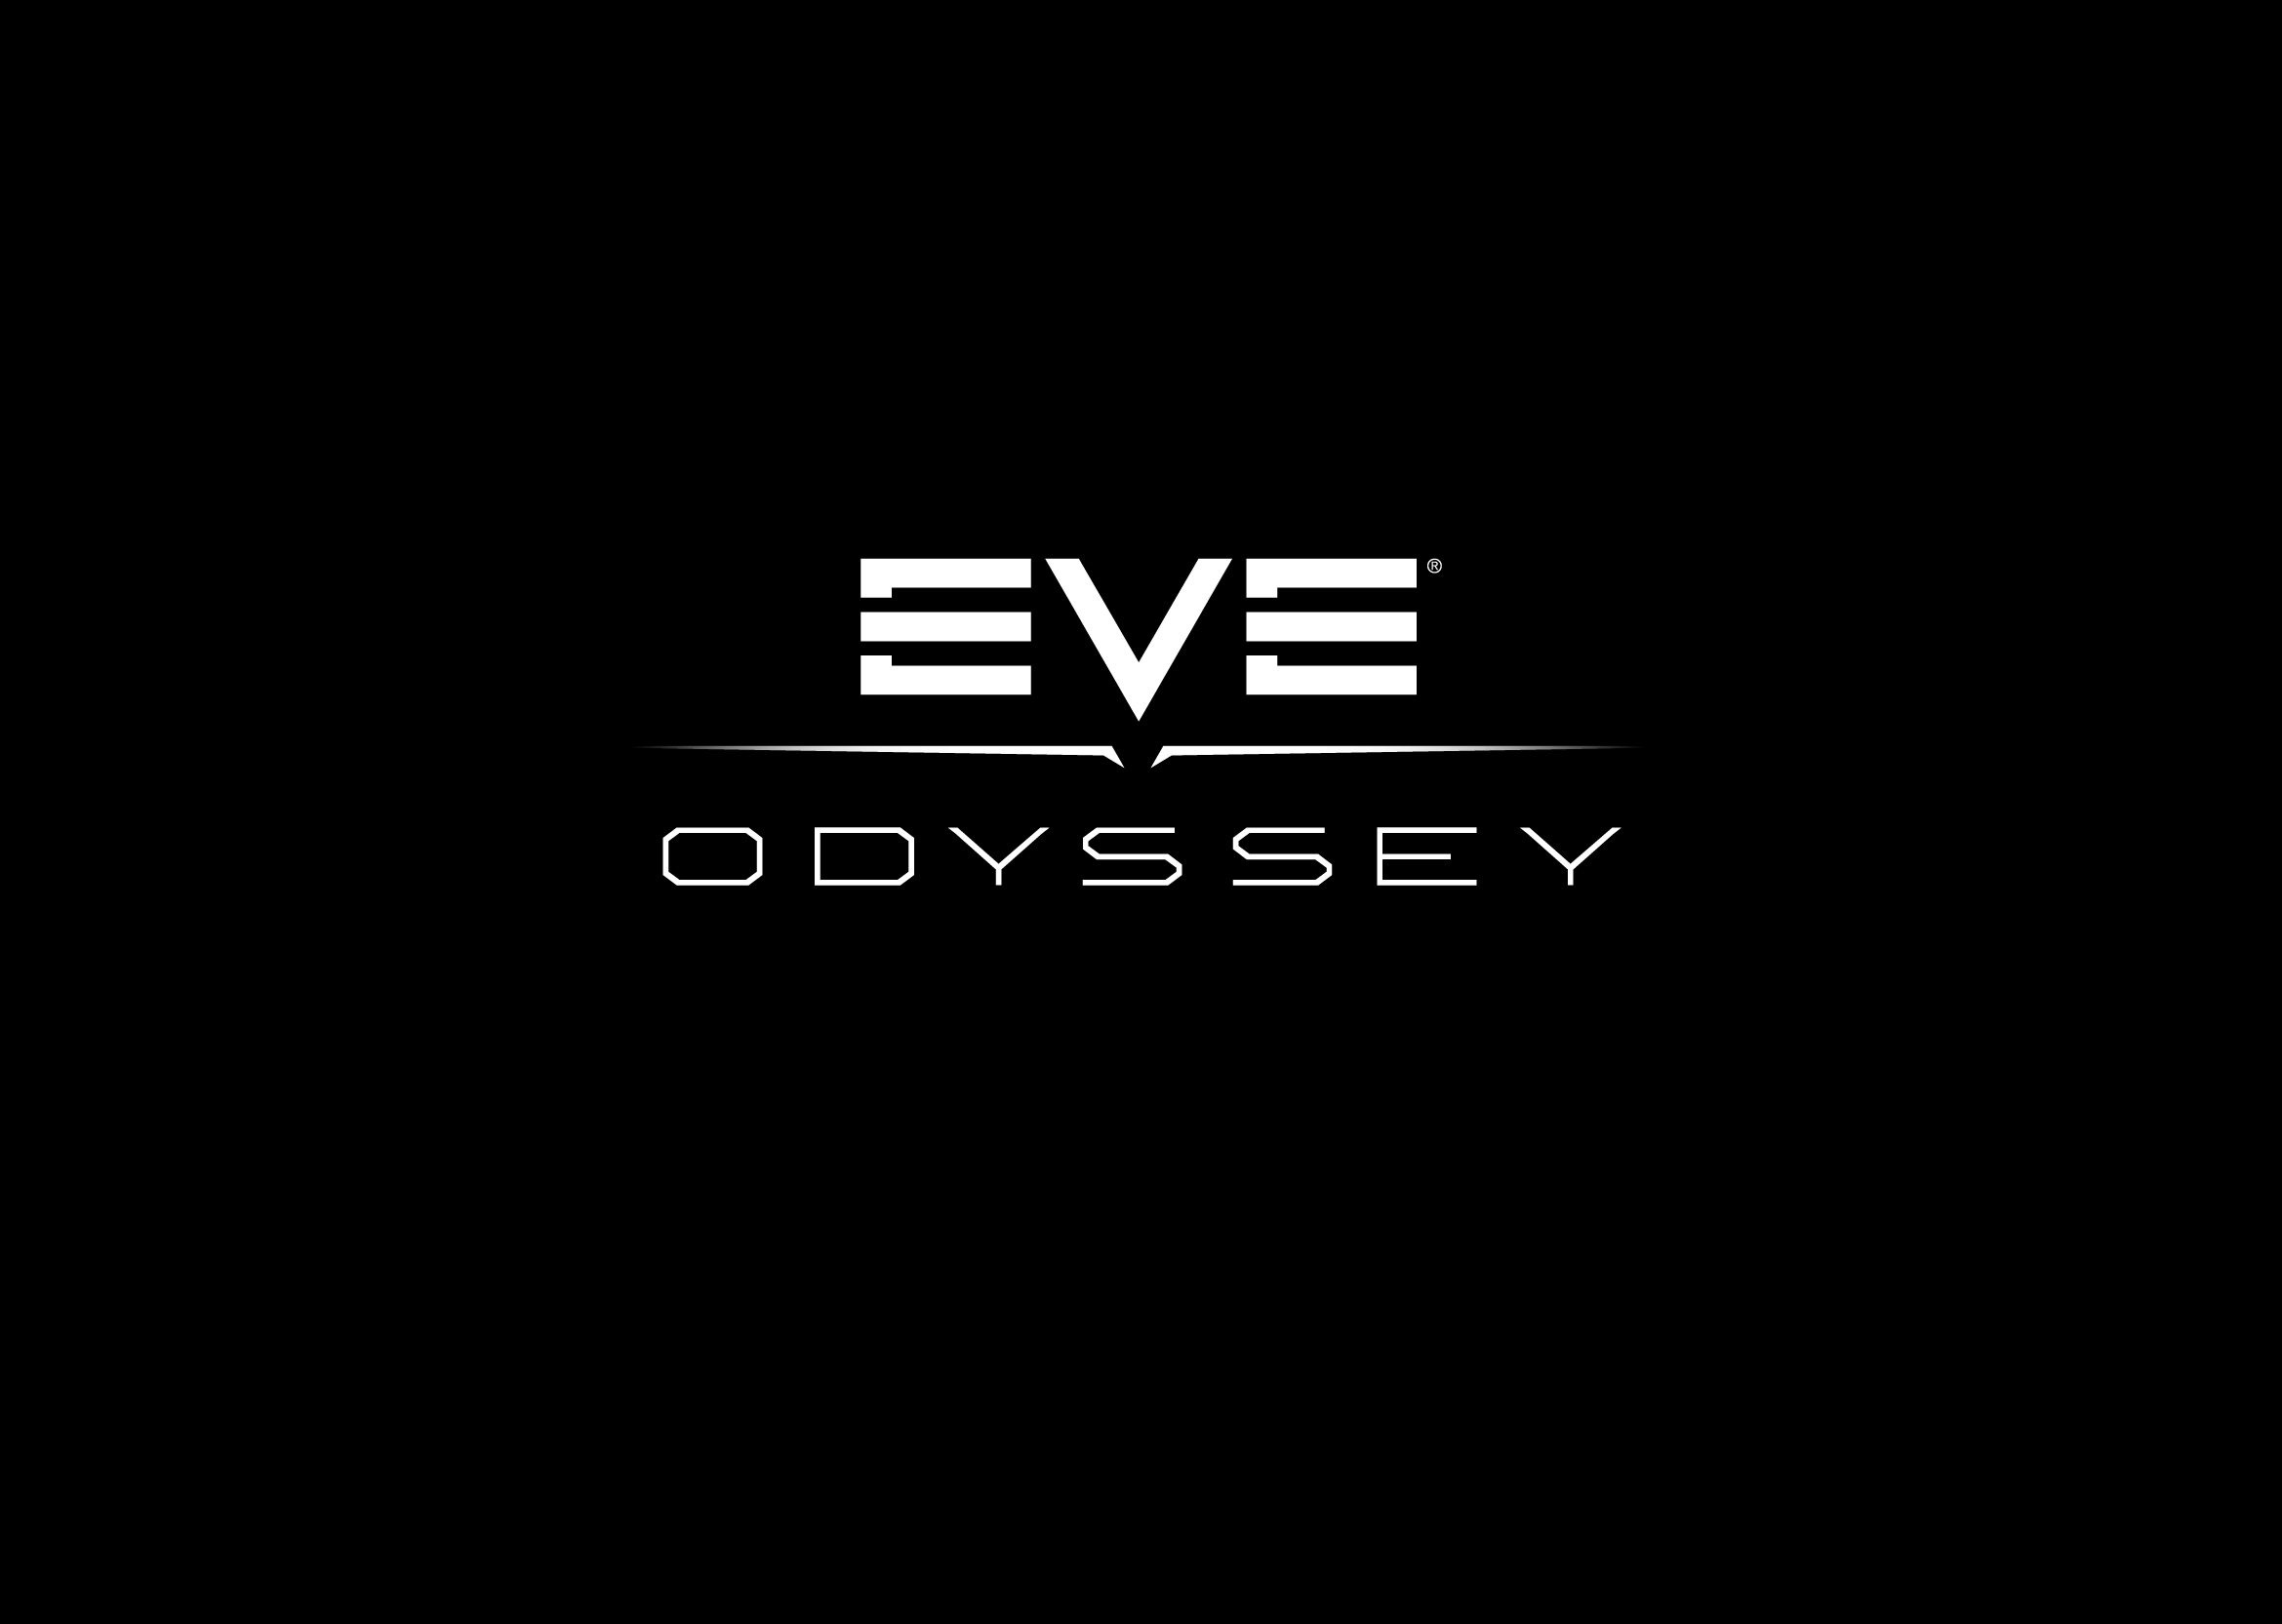 Odyssey Logo photo - 1